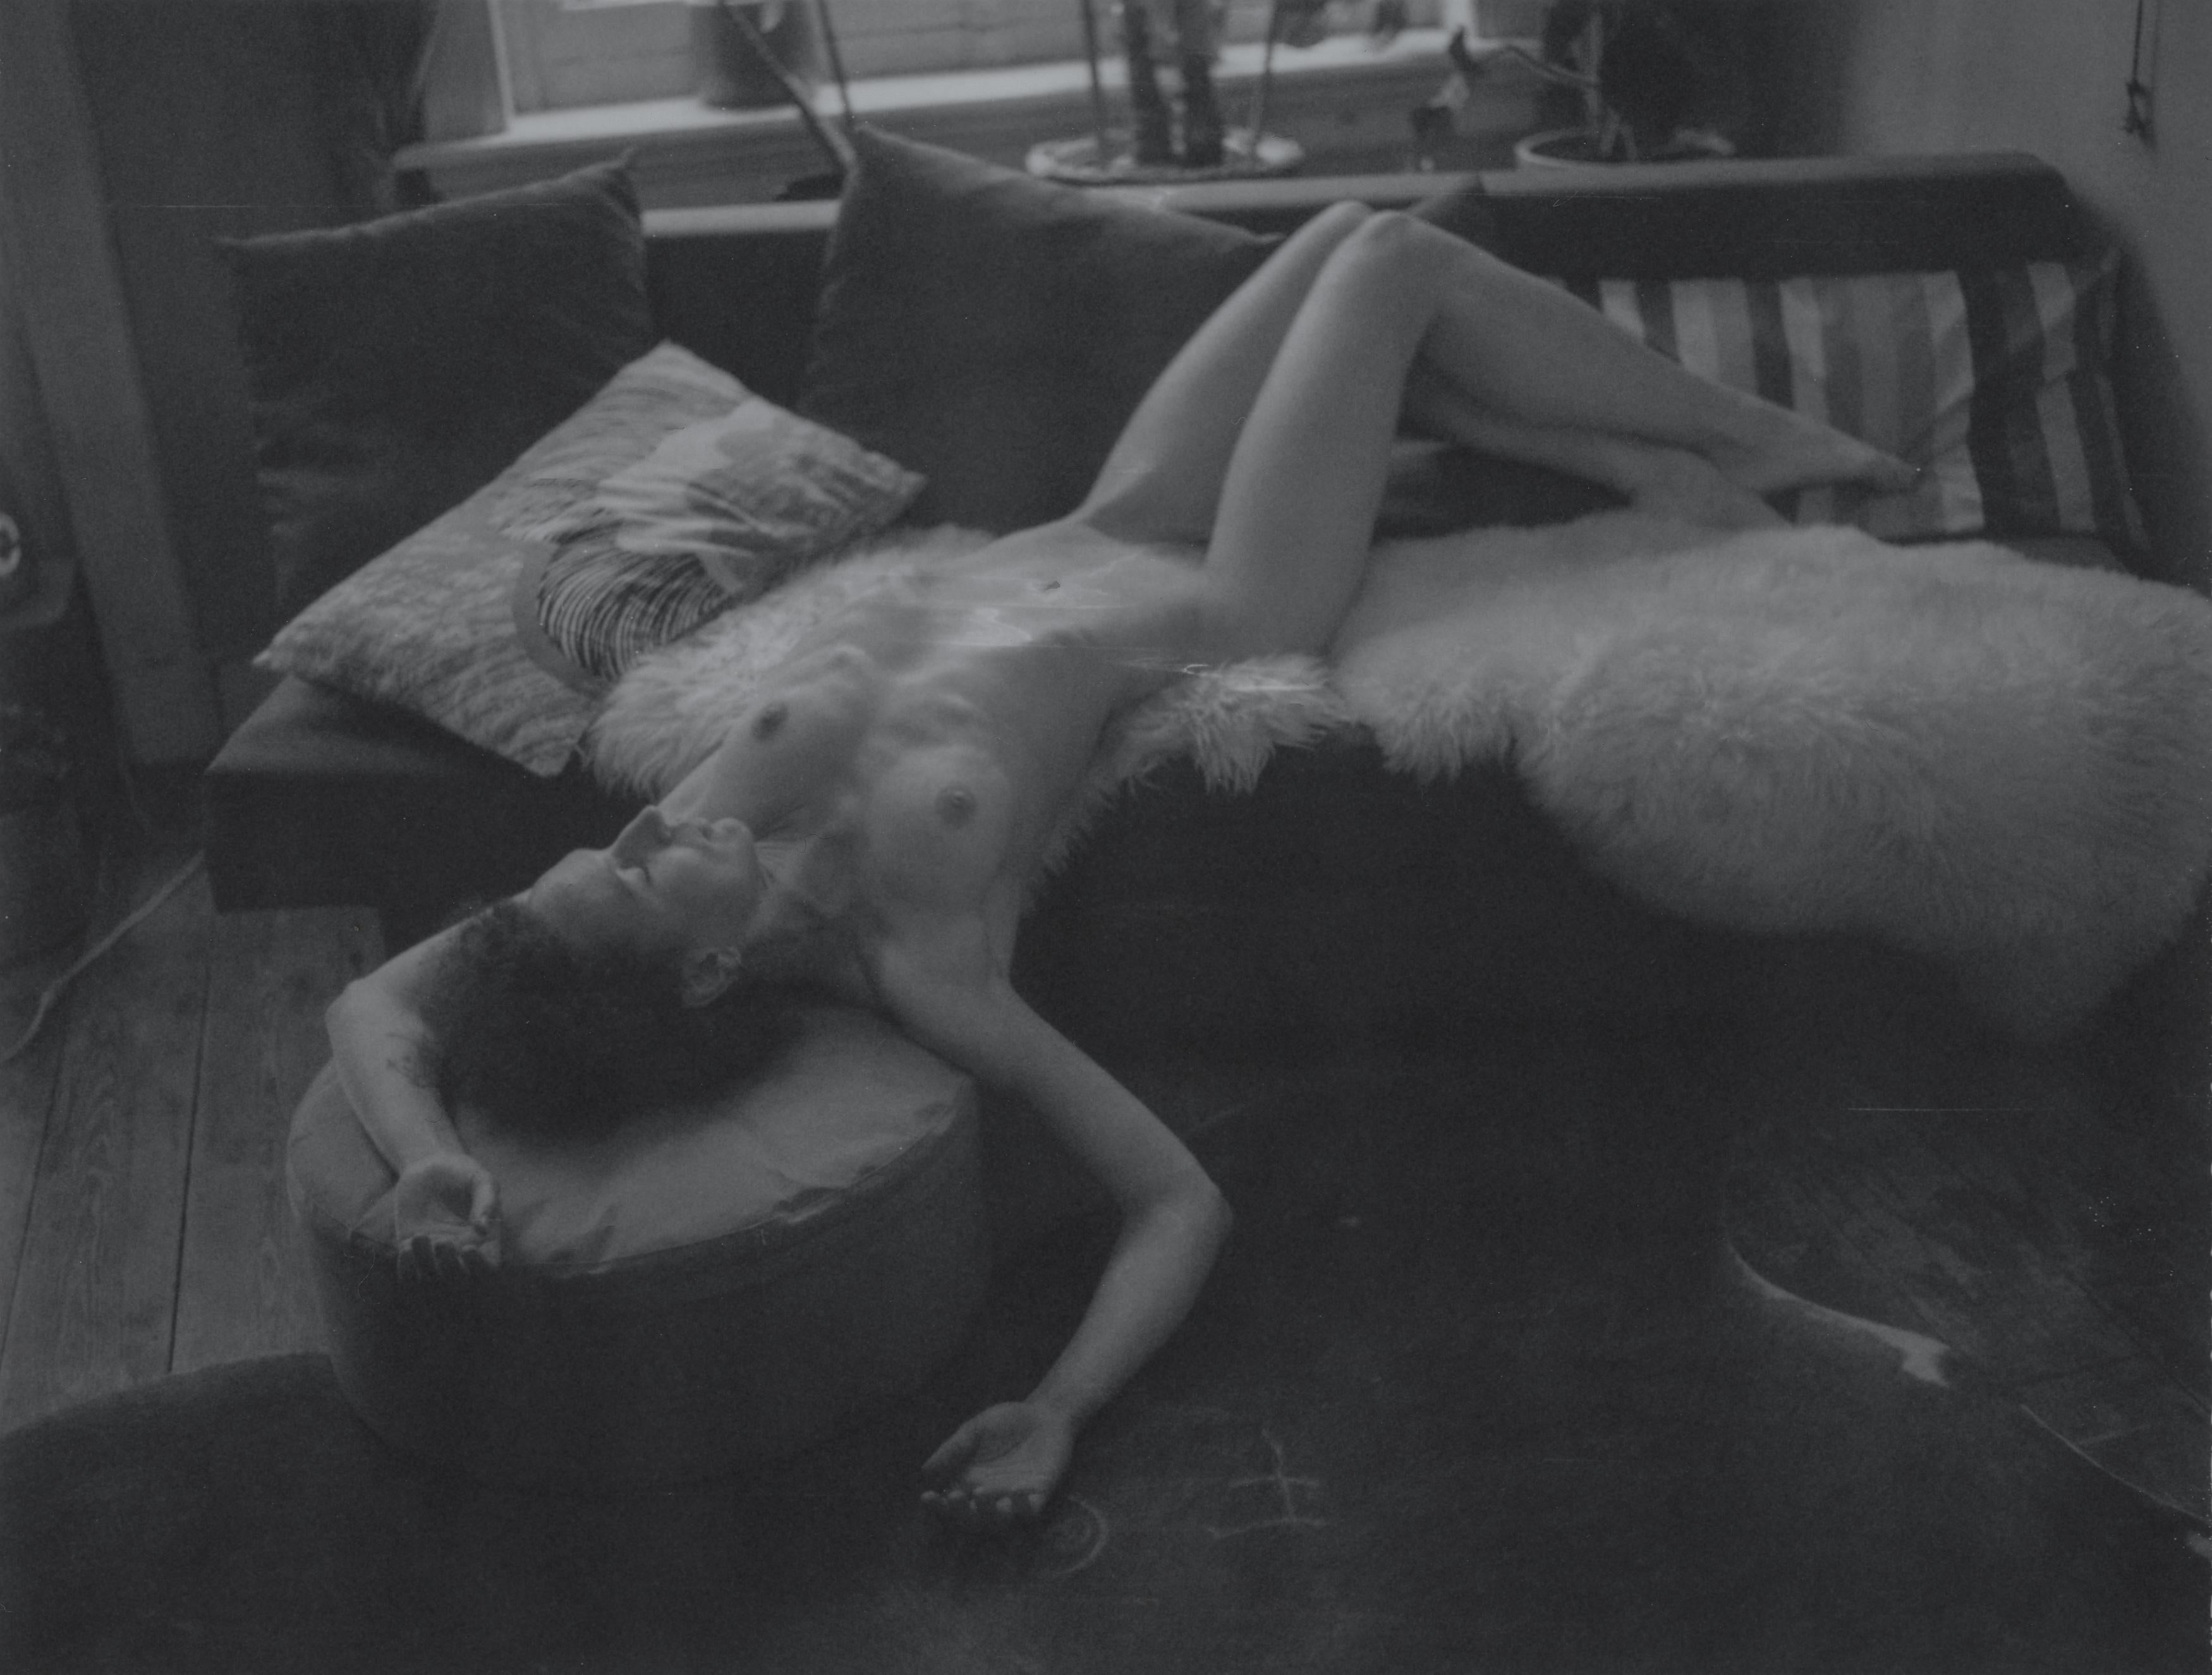 Kirsten Thys van den Audenaerde Nude Photograph - Spiralling  - Contemporary, Nude, Women, Polaroid, 21st Century